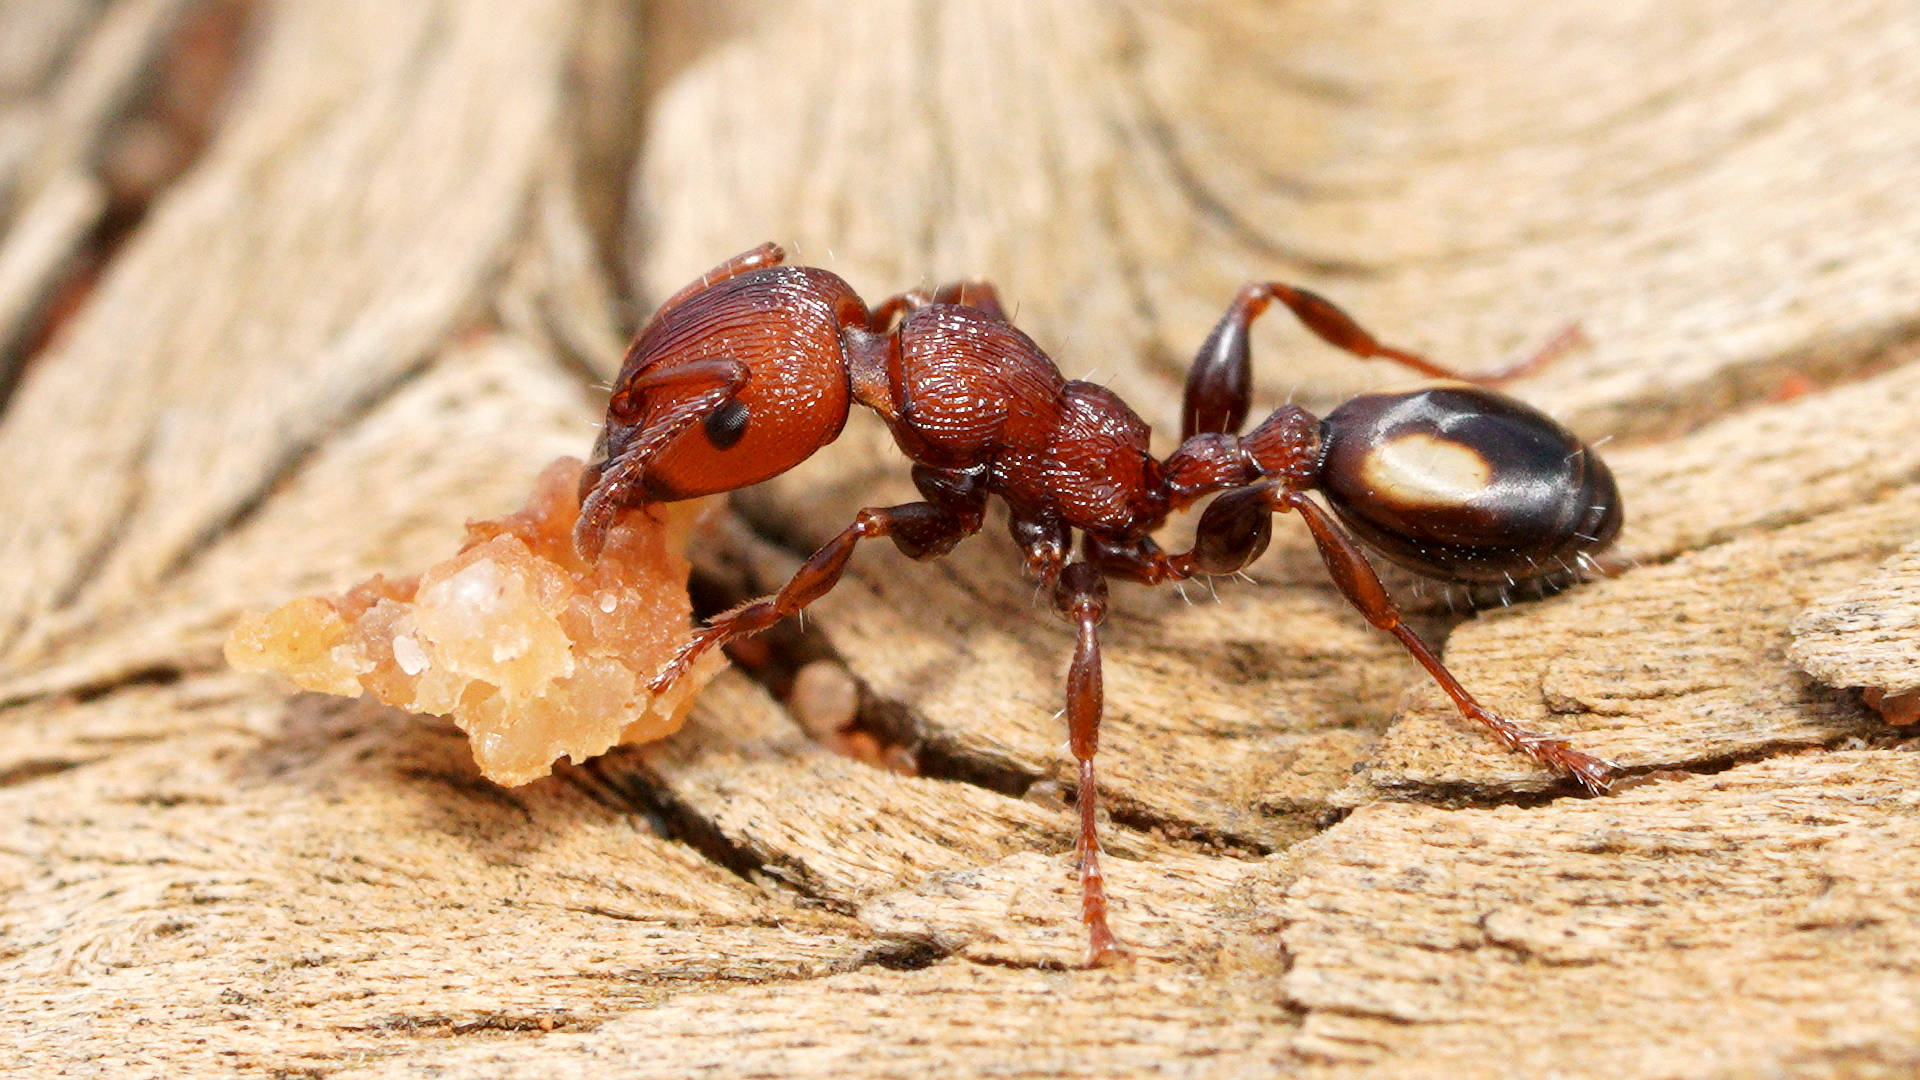 Adelaide's Muscle Man Ant (Podomyrma adelaidae)